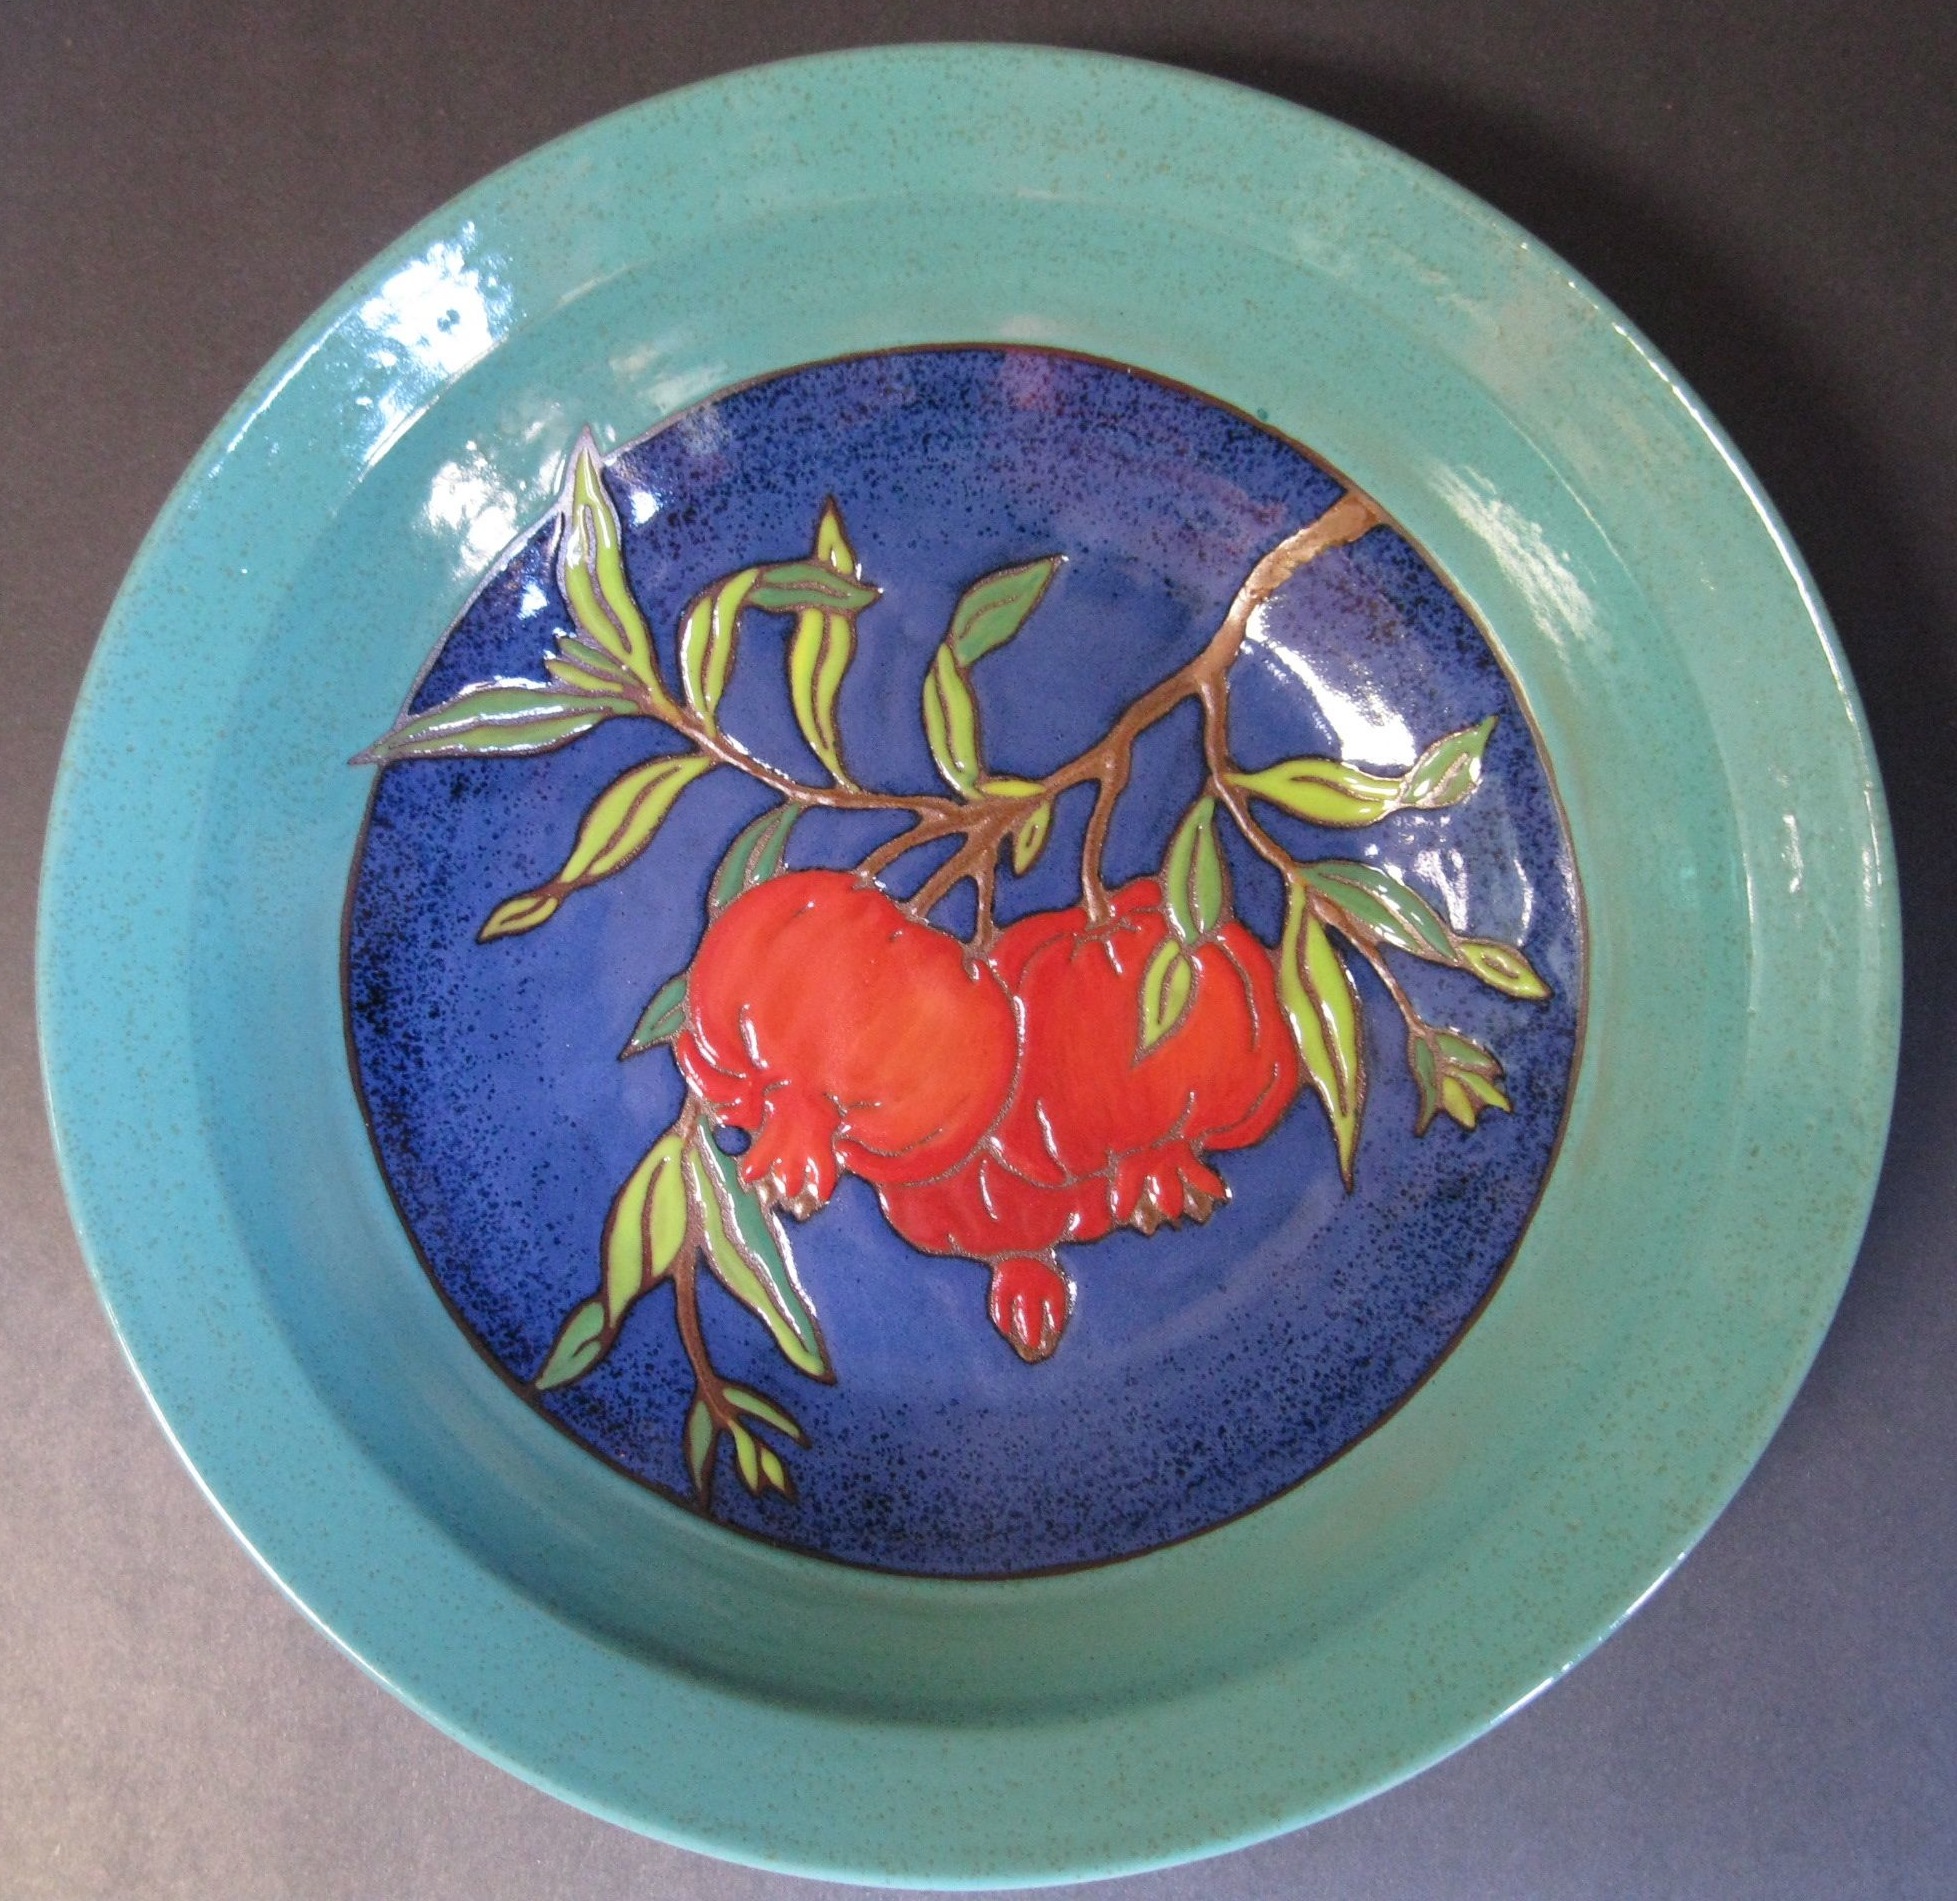 Cobalt Blue and Turquoise Bowl with Cuerda Seca Pomegranate Design